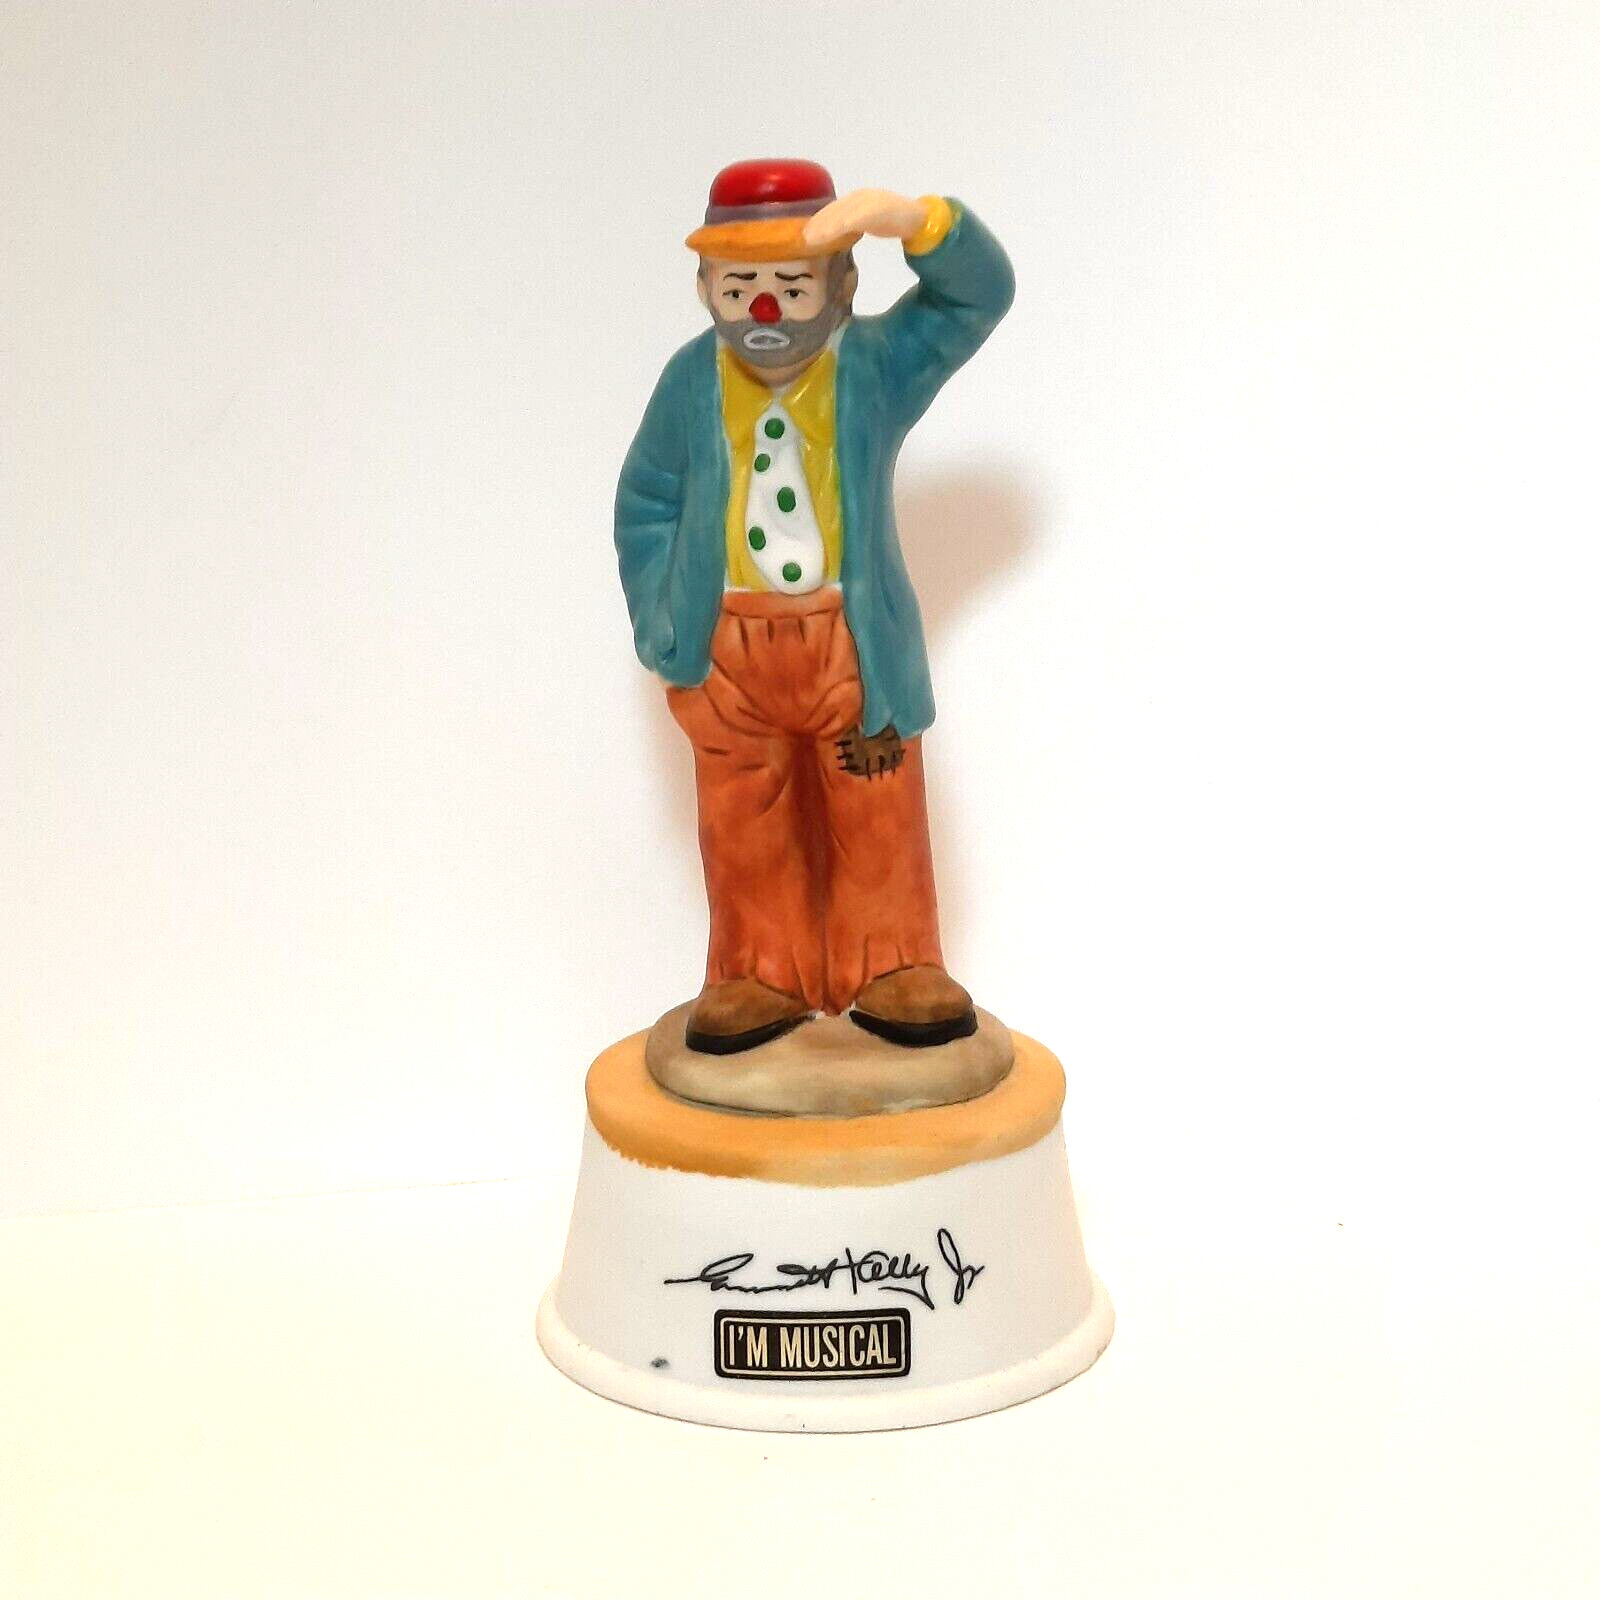 Vintage Emmett Kelly Jr Weary Willie Music Box Figurine plays Send In The Clowns